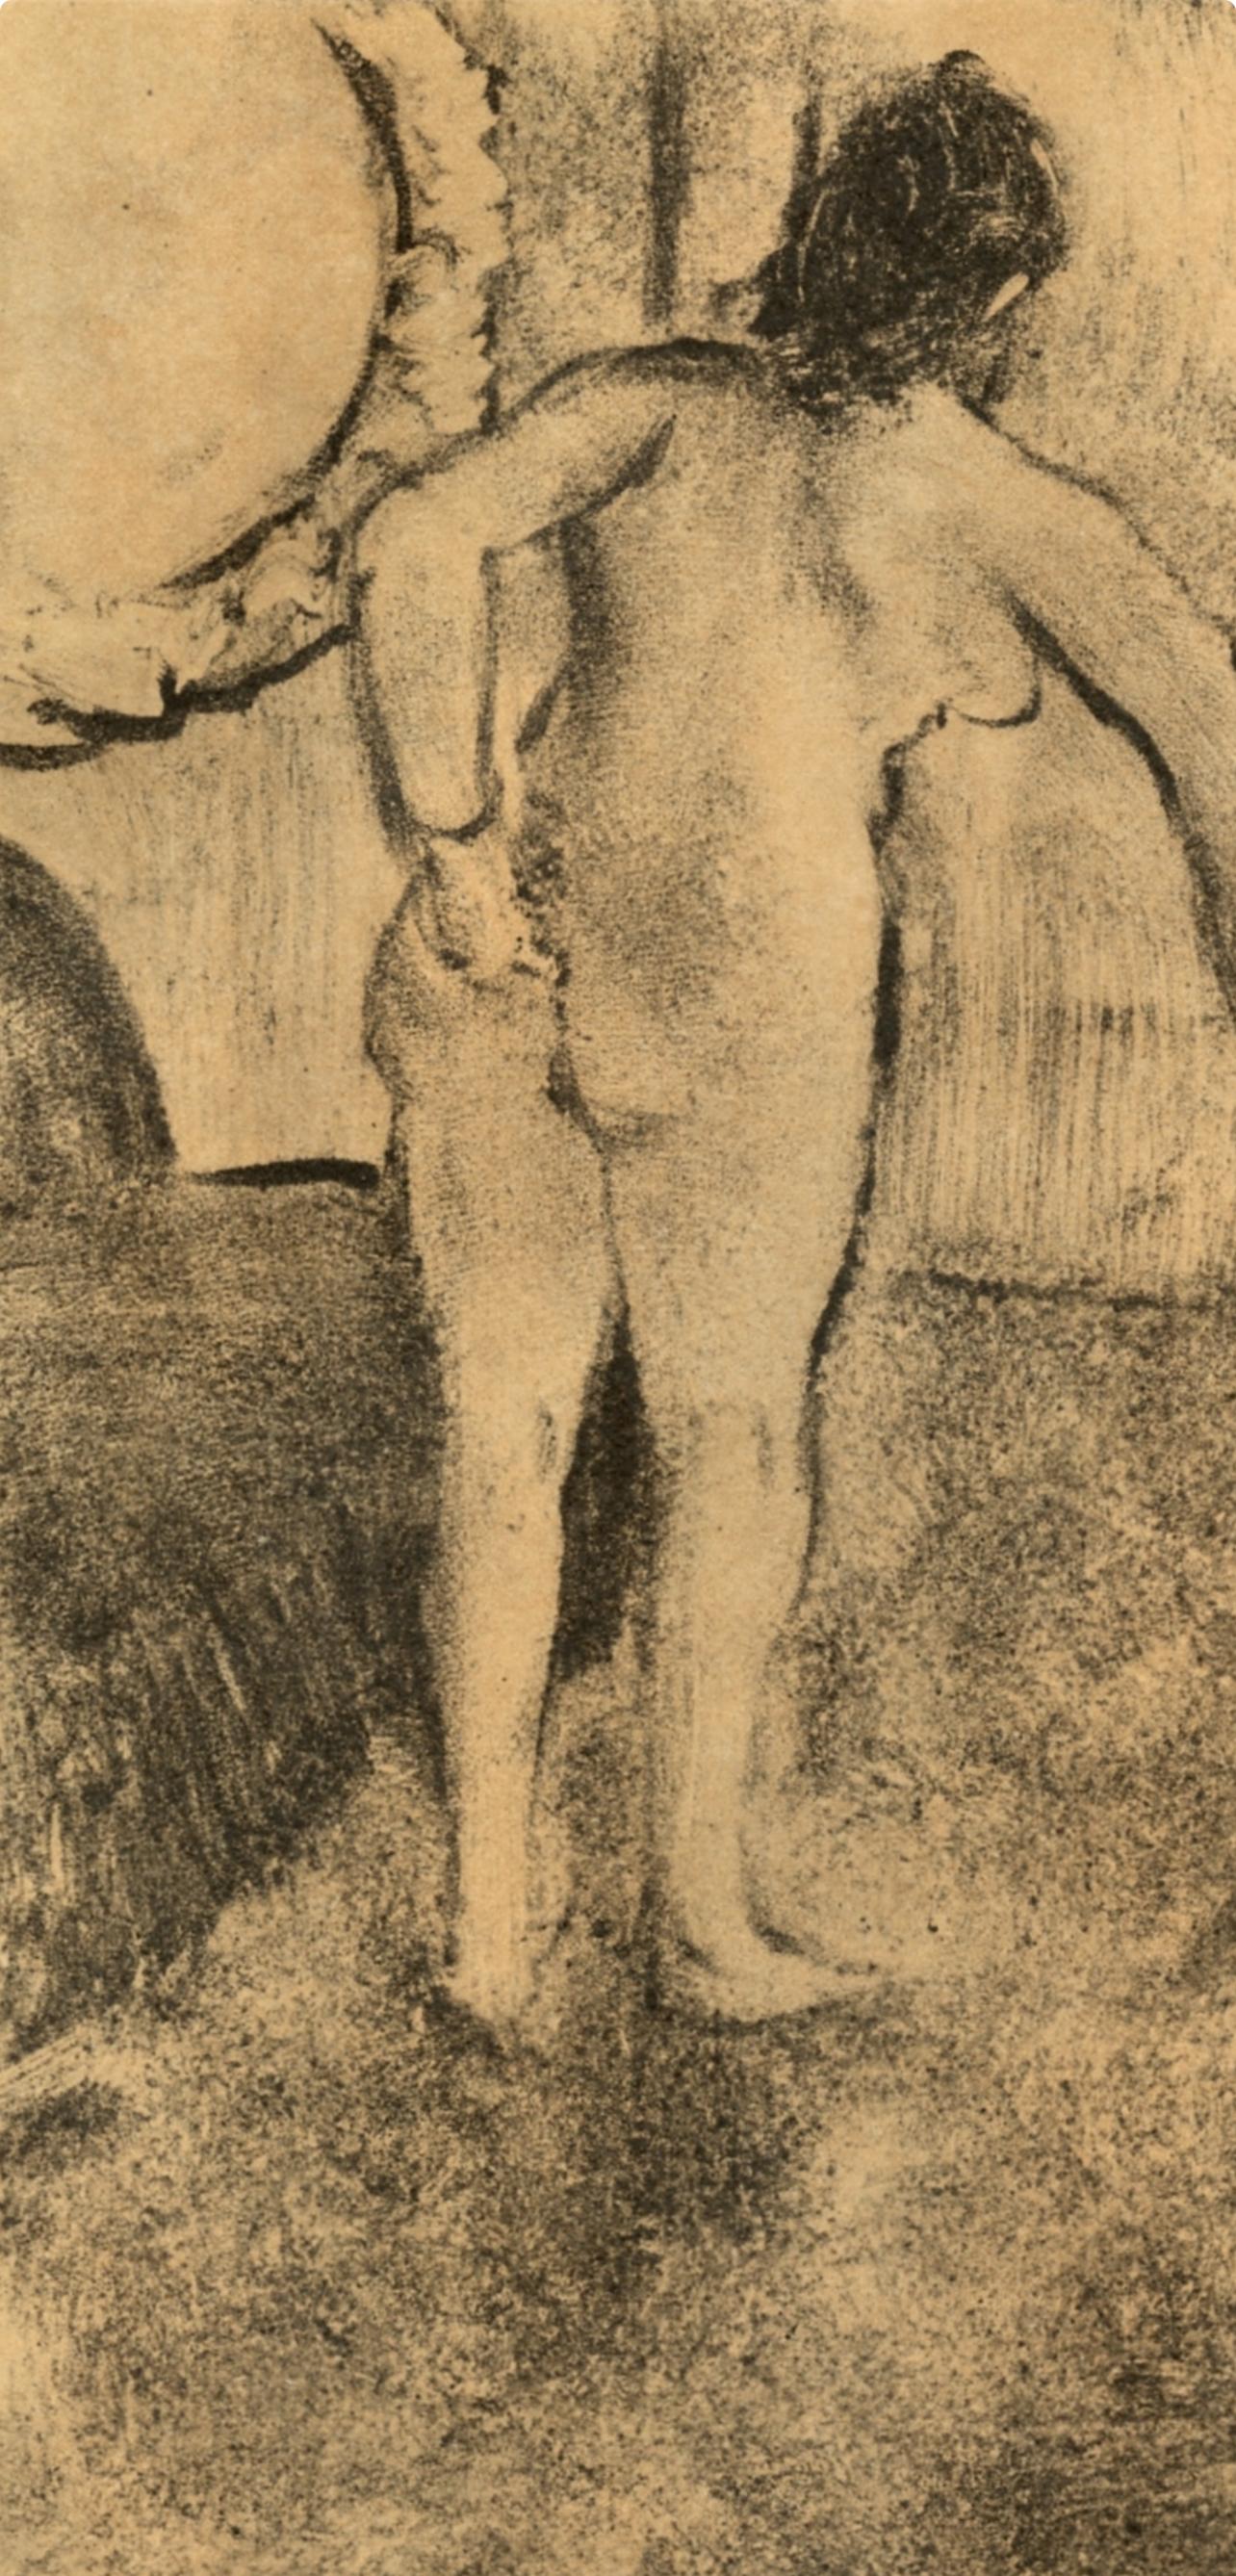 Degas, Nu debout, Les Monotypes (nach) (Impressionismus), Print, von Edgar Degas